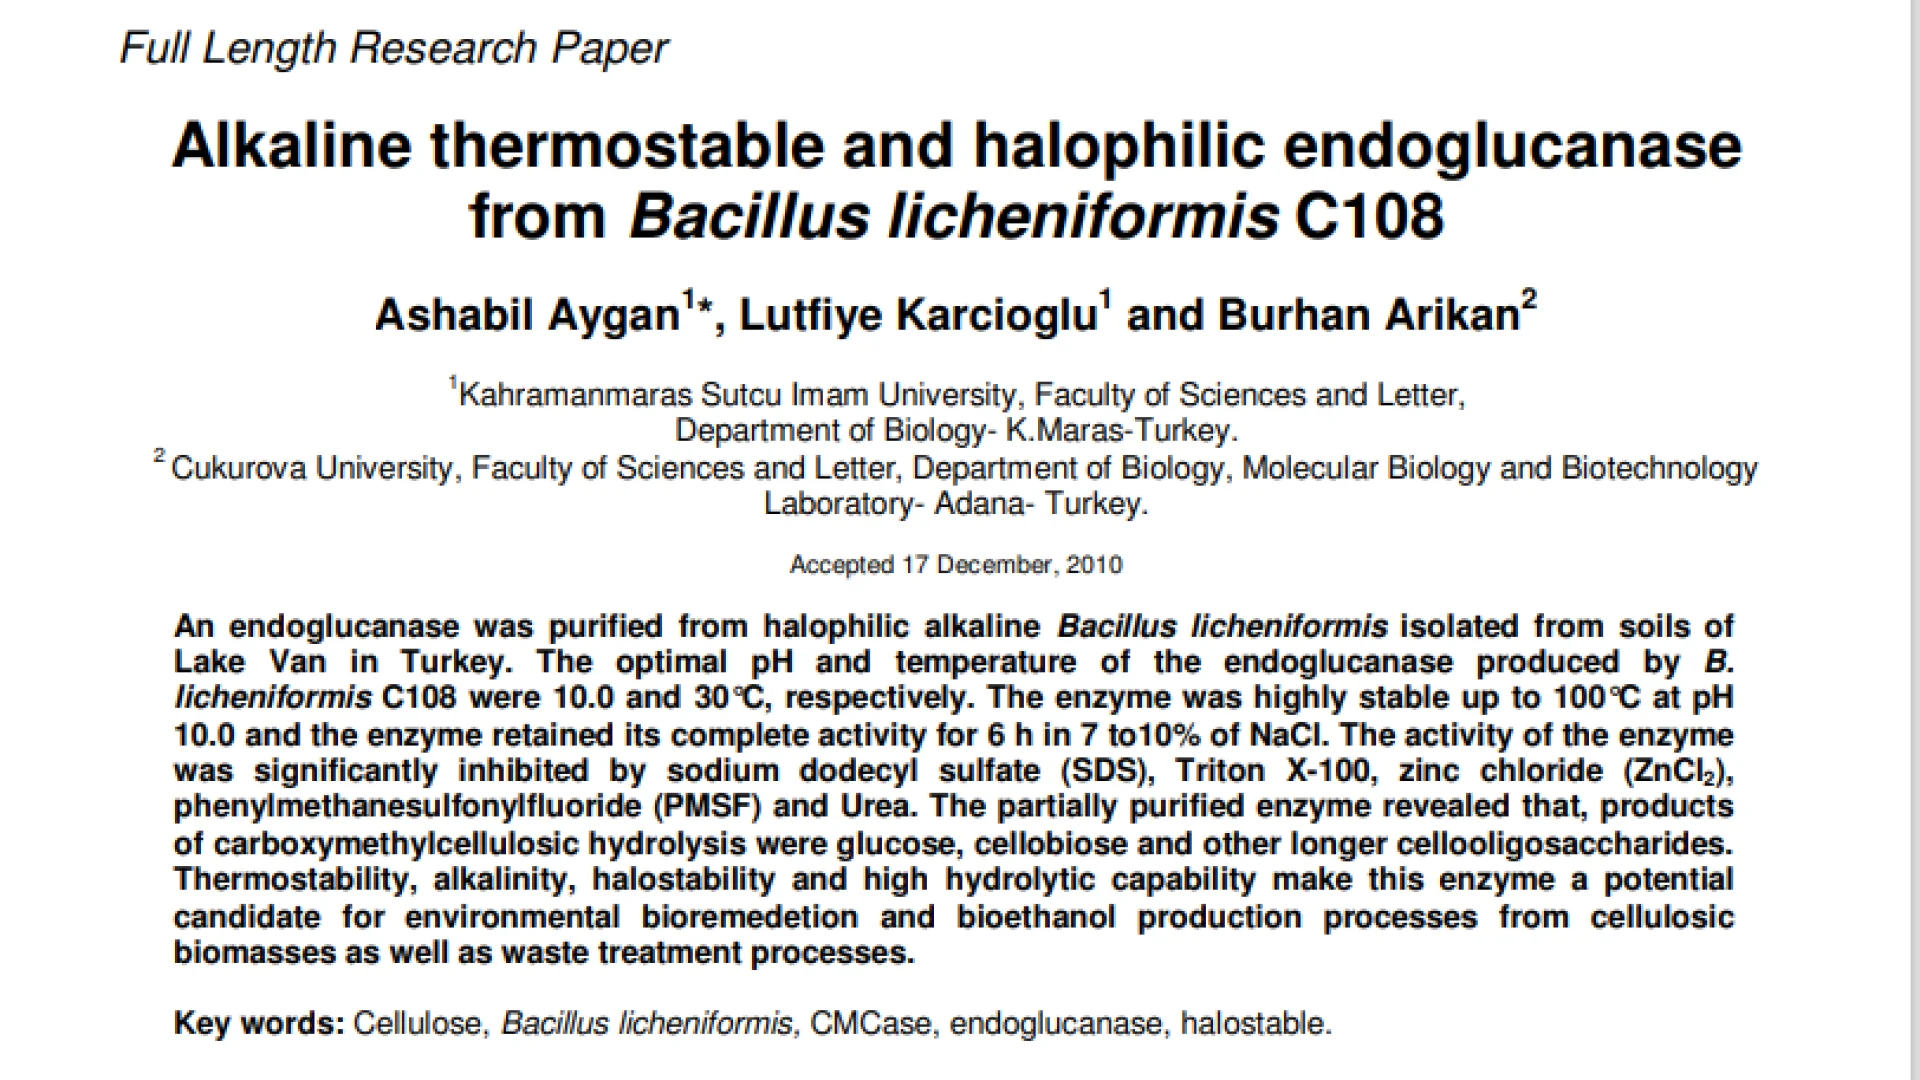 Alkaline thermostable and halophilic endoglucanase from Bacillus licheniformis C108